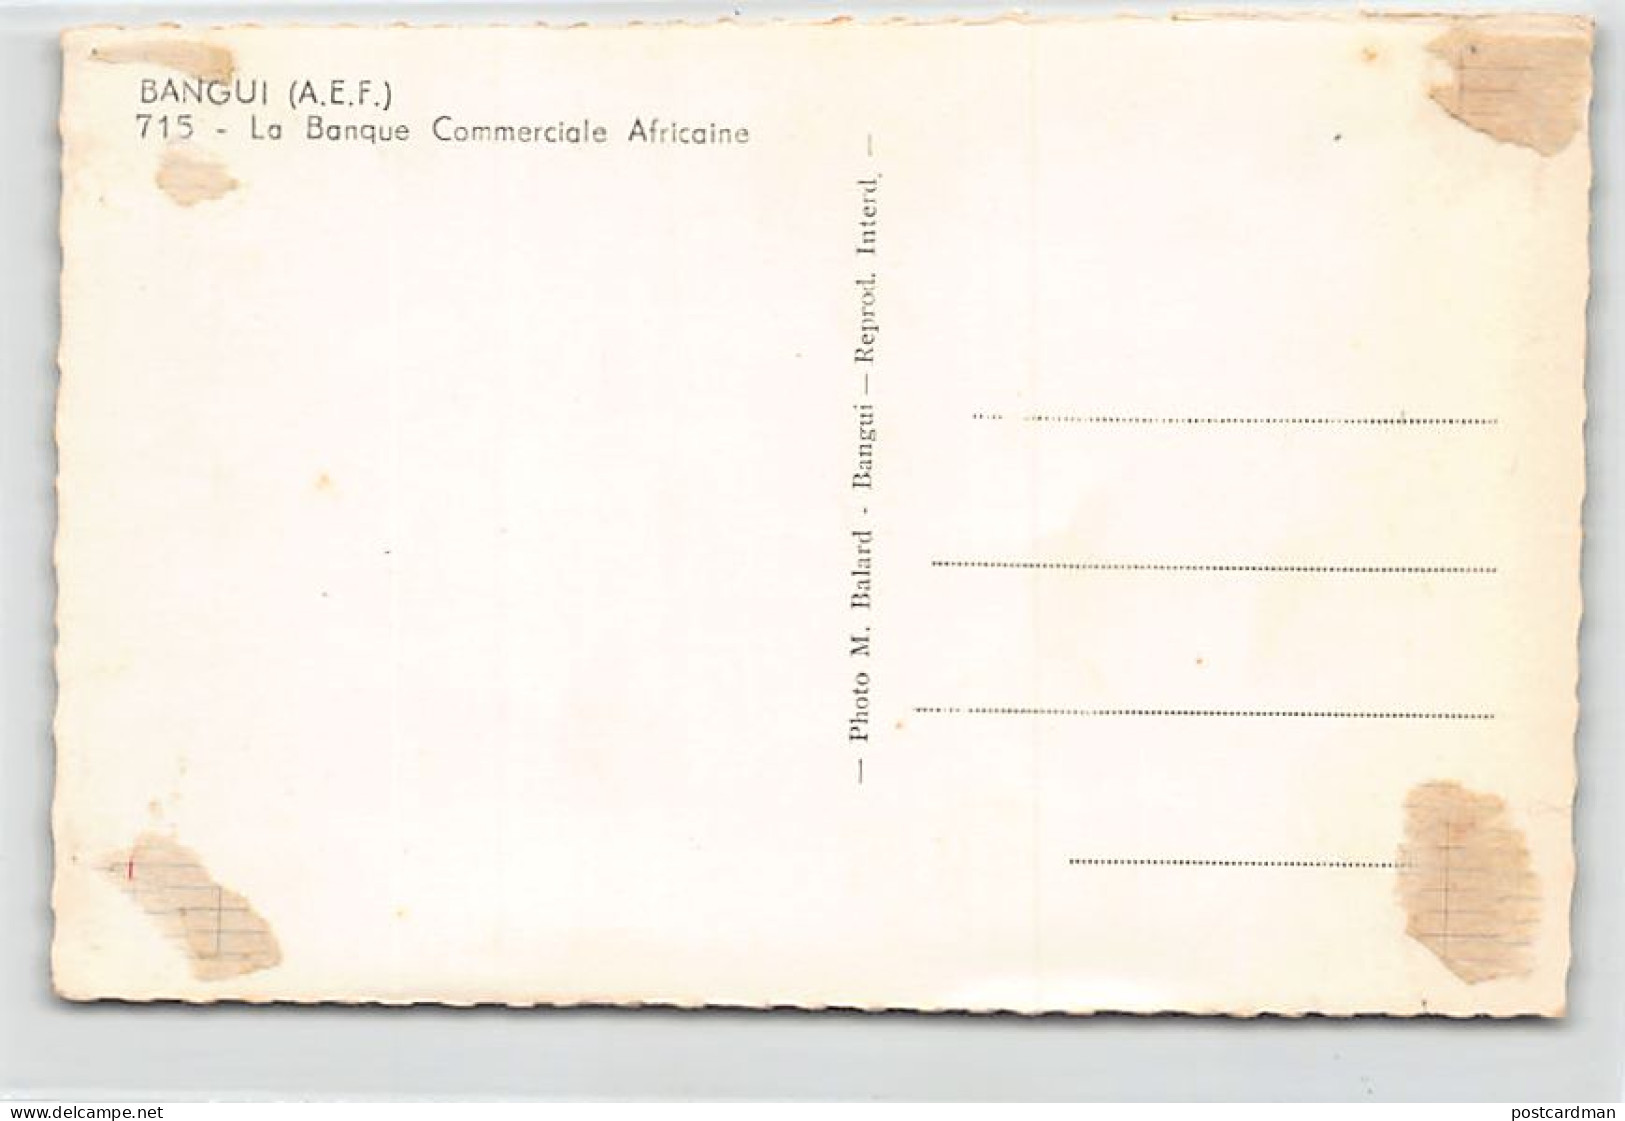 Centrafrique - BANGUI - La Banque Commerciale Africaine - Ed. M. Balard 715 - Repubblica Centroafricana